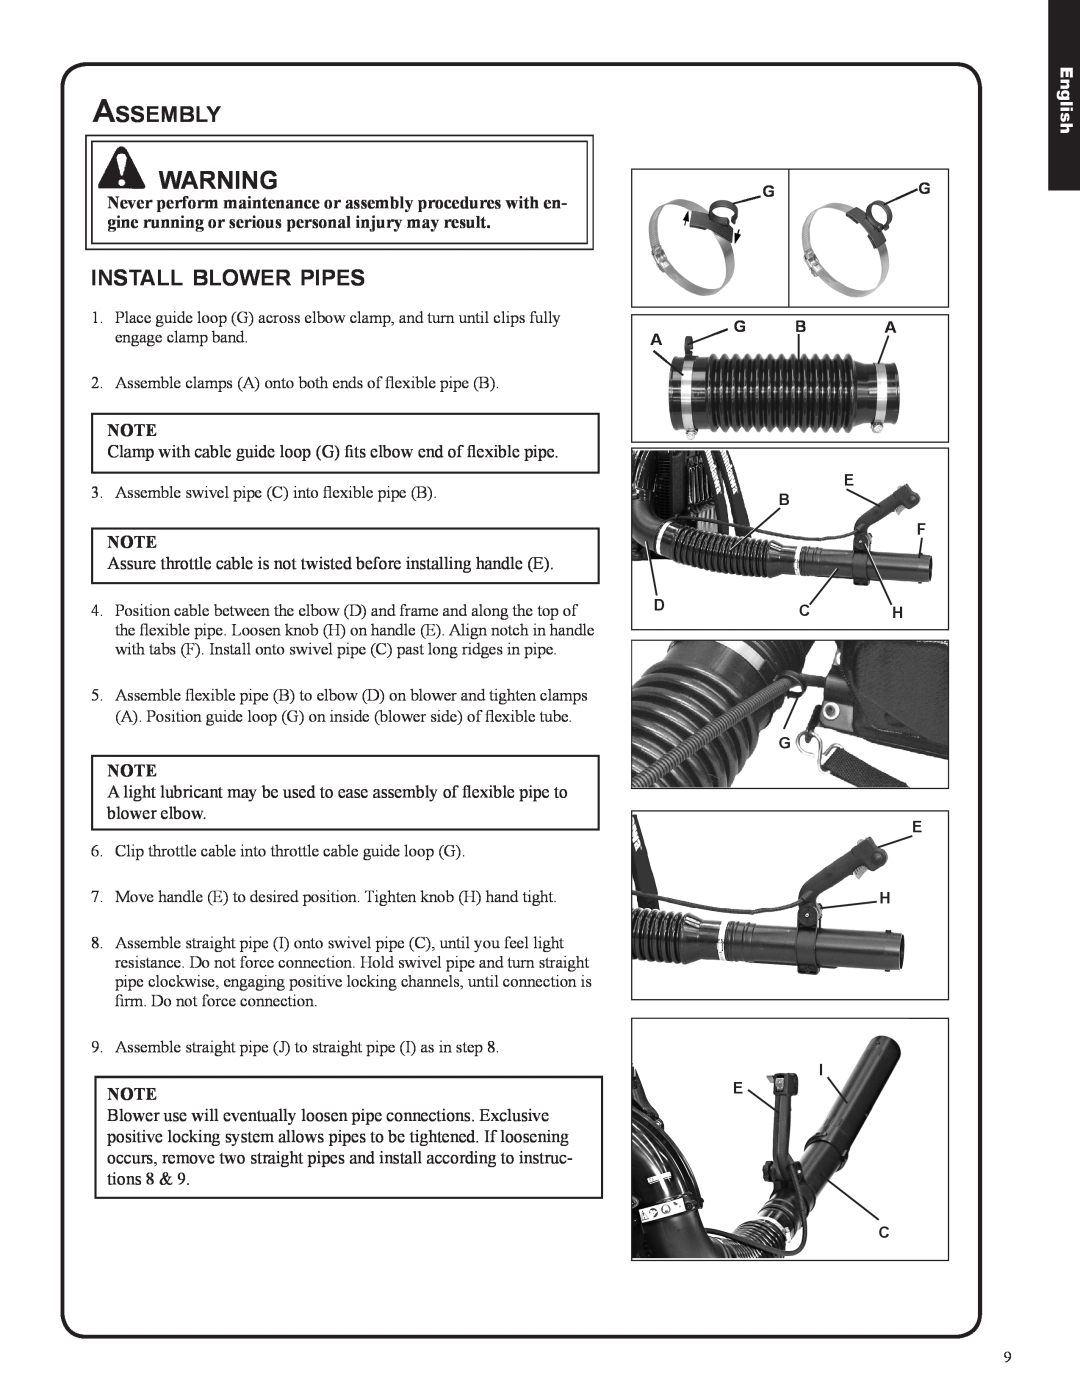 Shindaiwa 82050, EB633RT manual Assembly, install blower pipes, English 